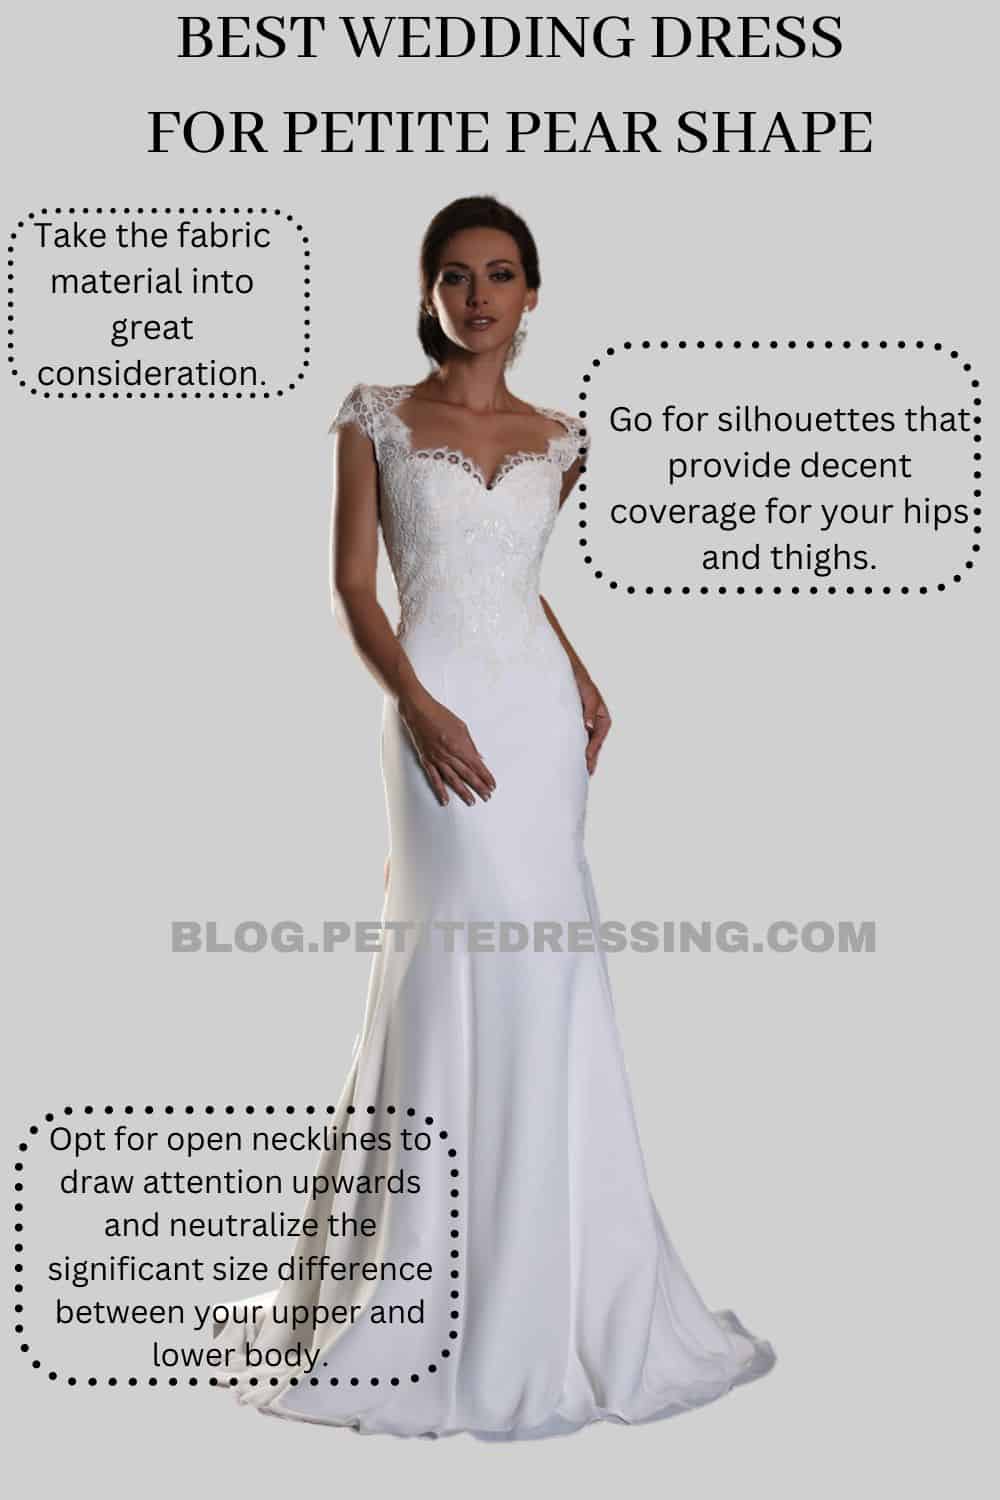 Wedding Dress Guide for the Petite Pear Shape - Petite Dressing